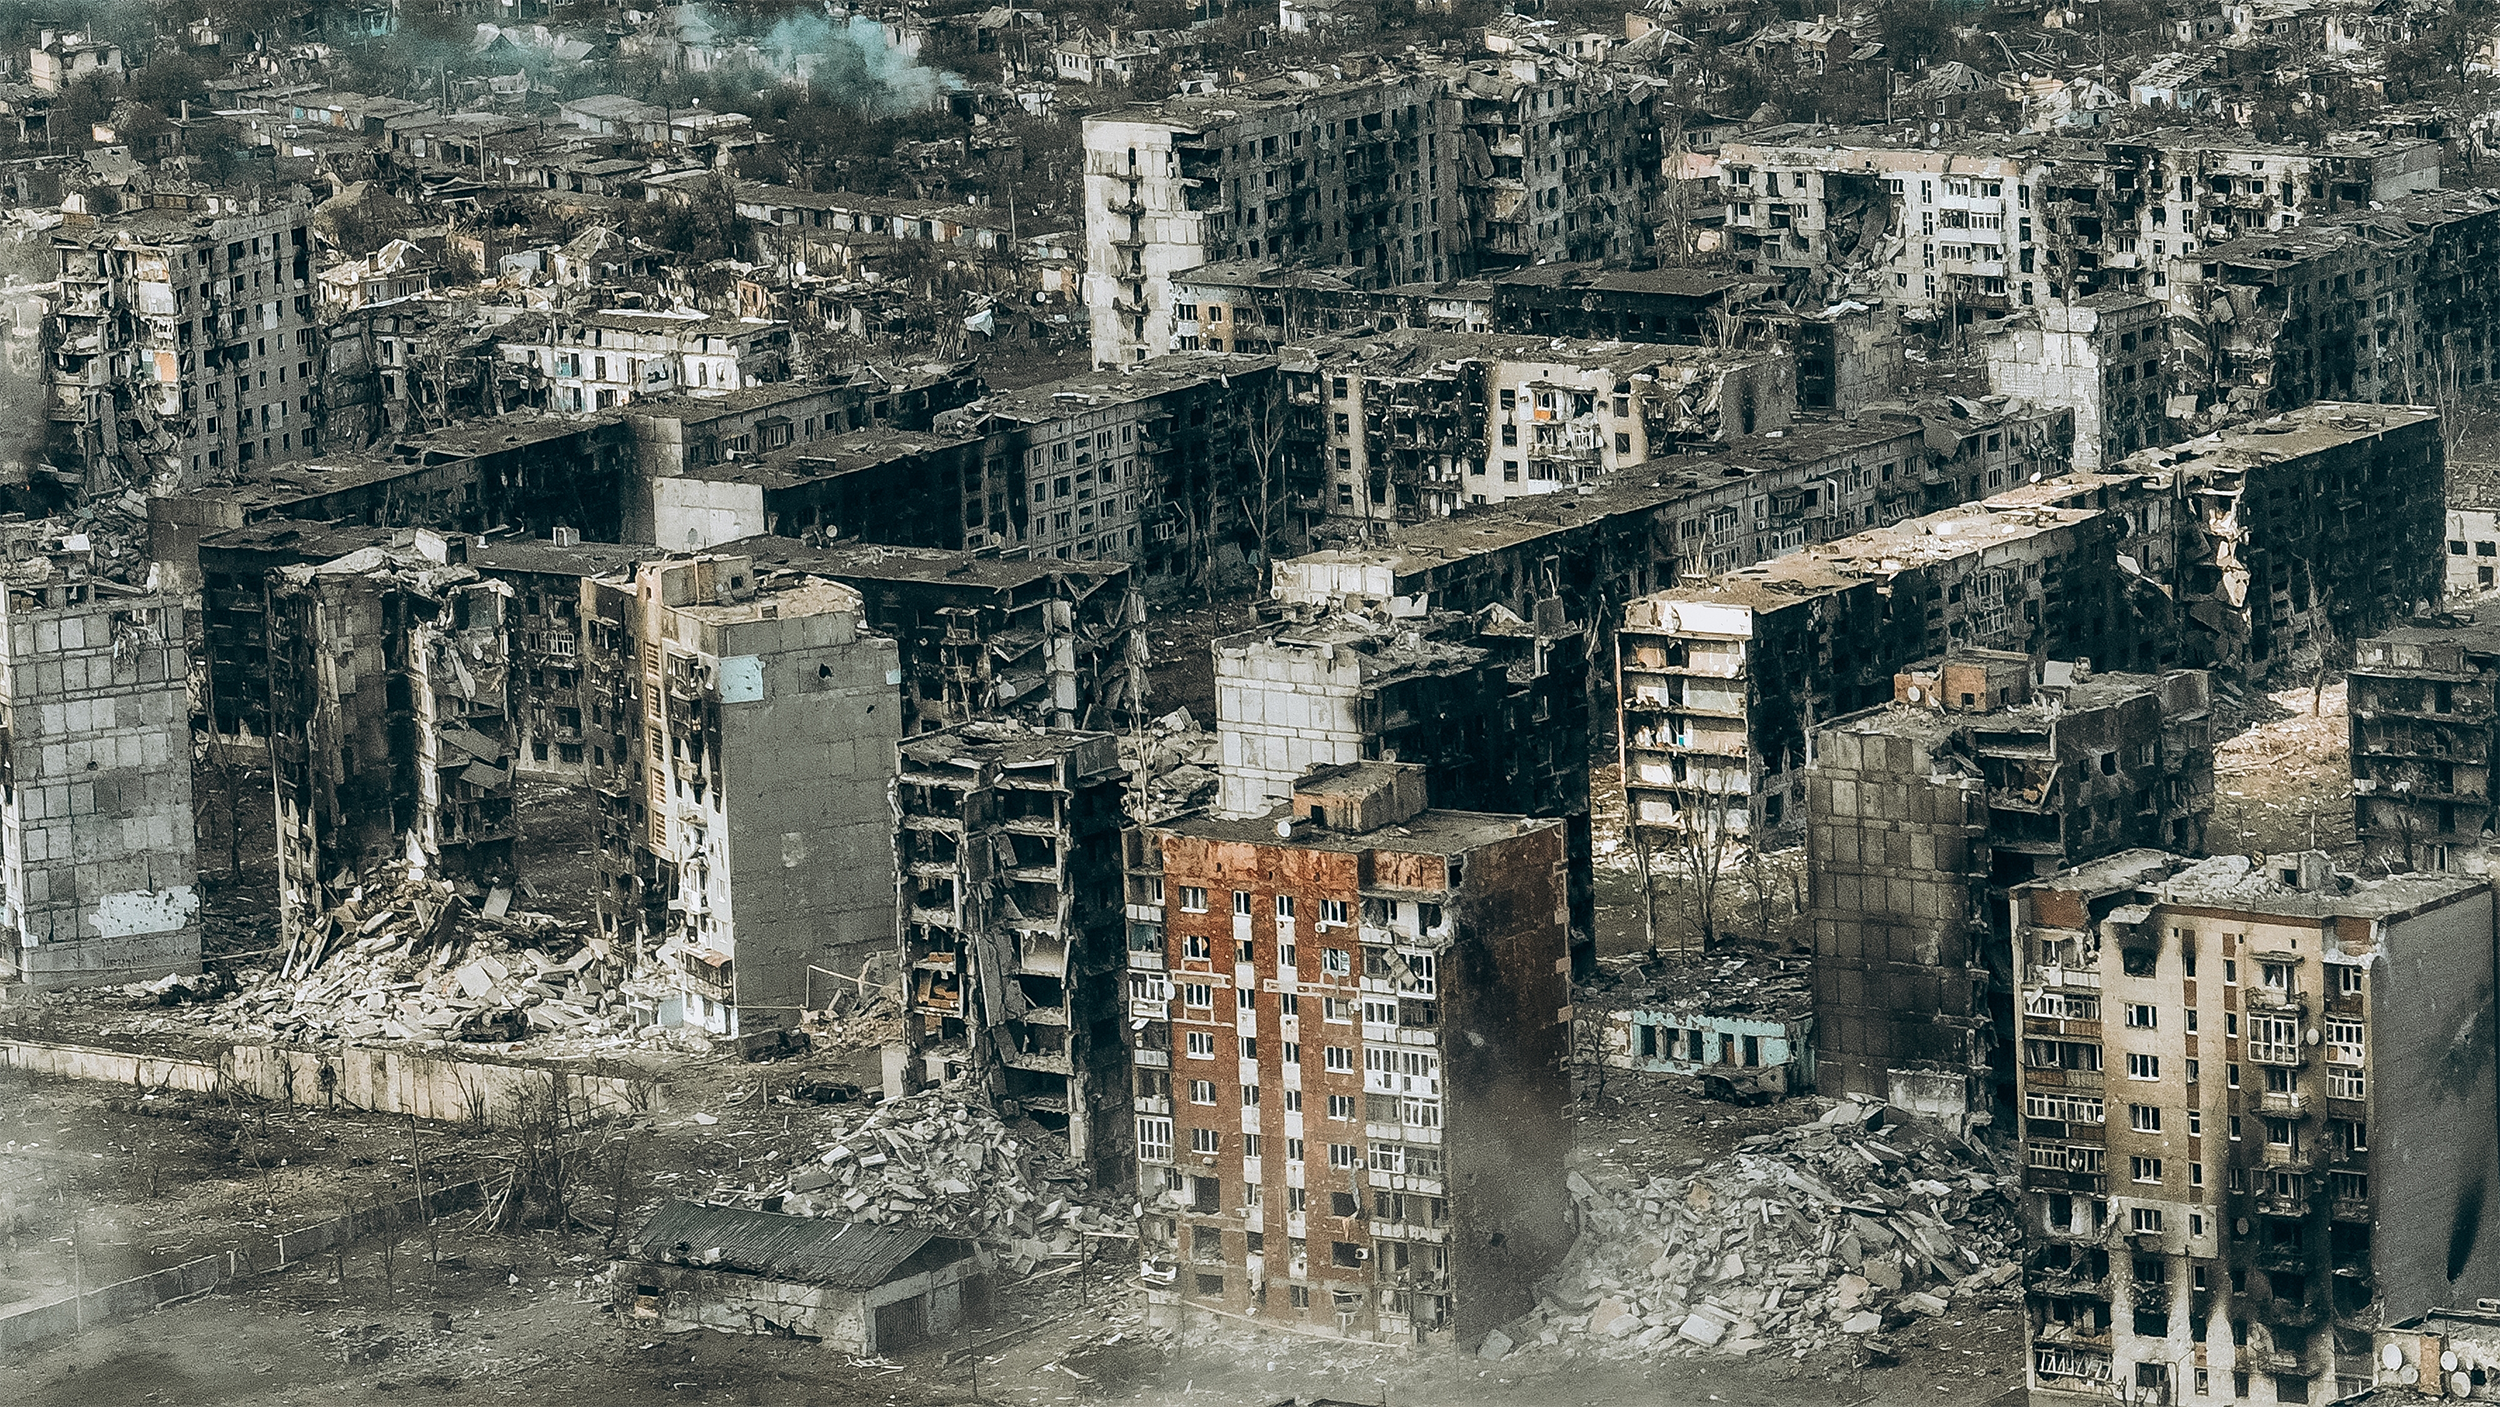 City of Bakhmut, Ukraine, buildings devastated in war